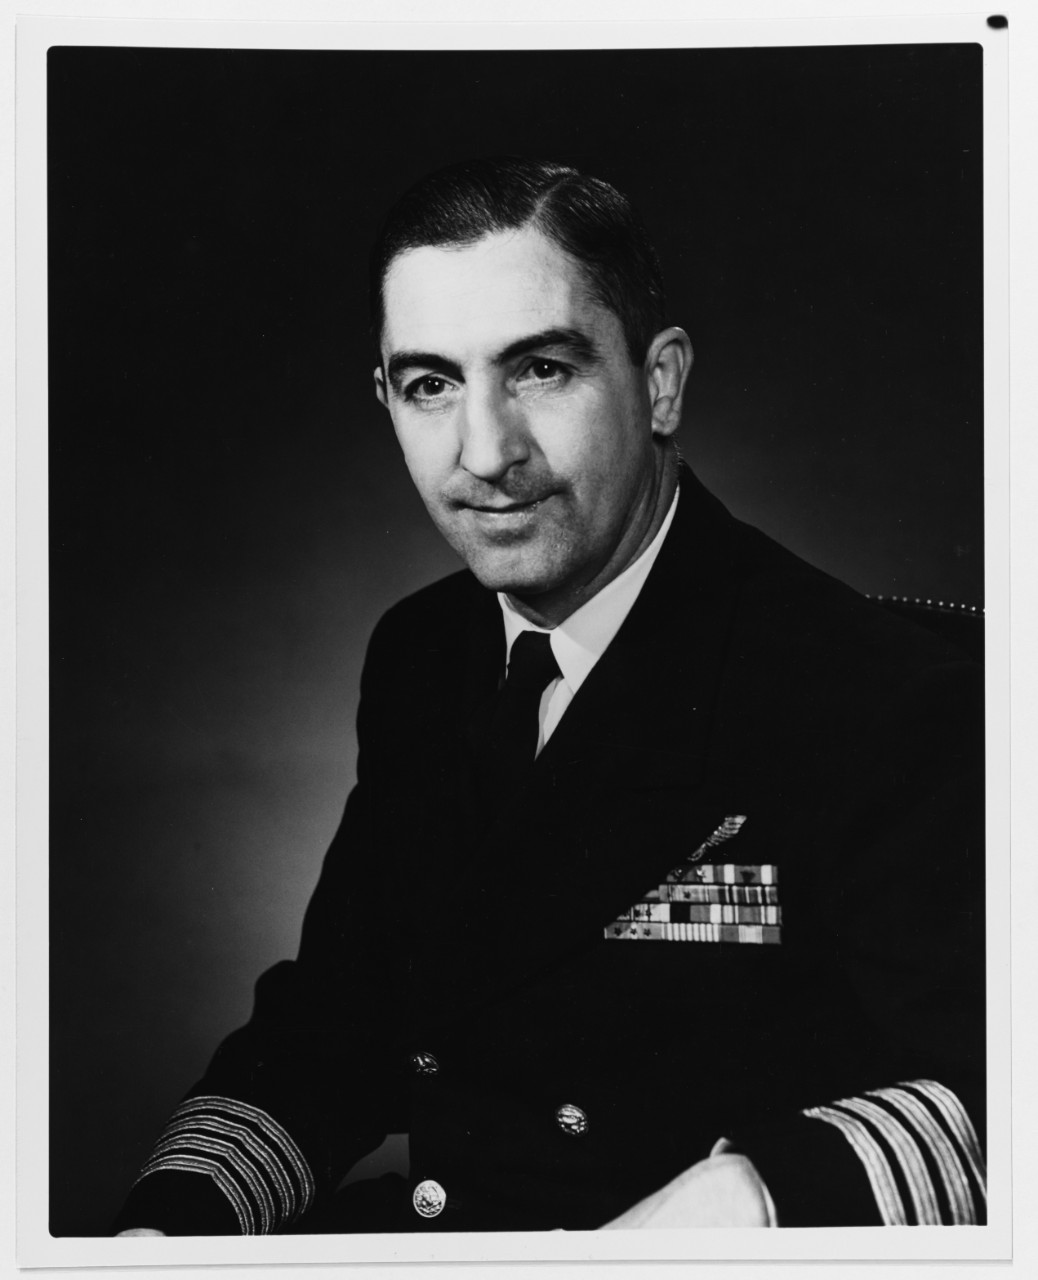 Captain Thomas A. Christopher, U.S. Navy